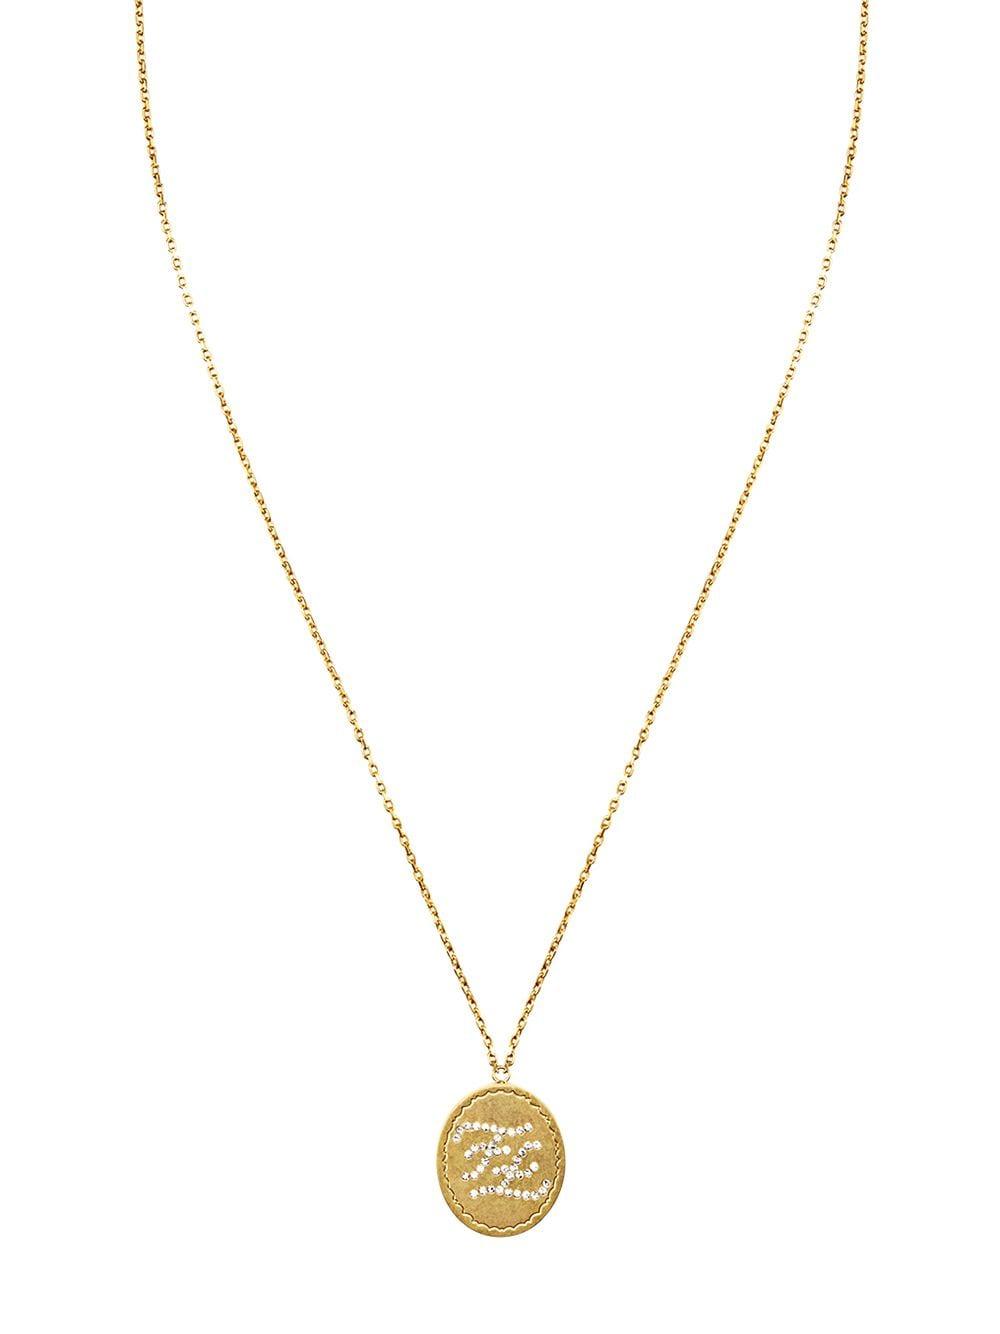 Fendi Crystal Ff Logo Pendant Necklace in Metallic for Men - Lyst